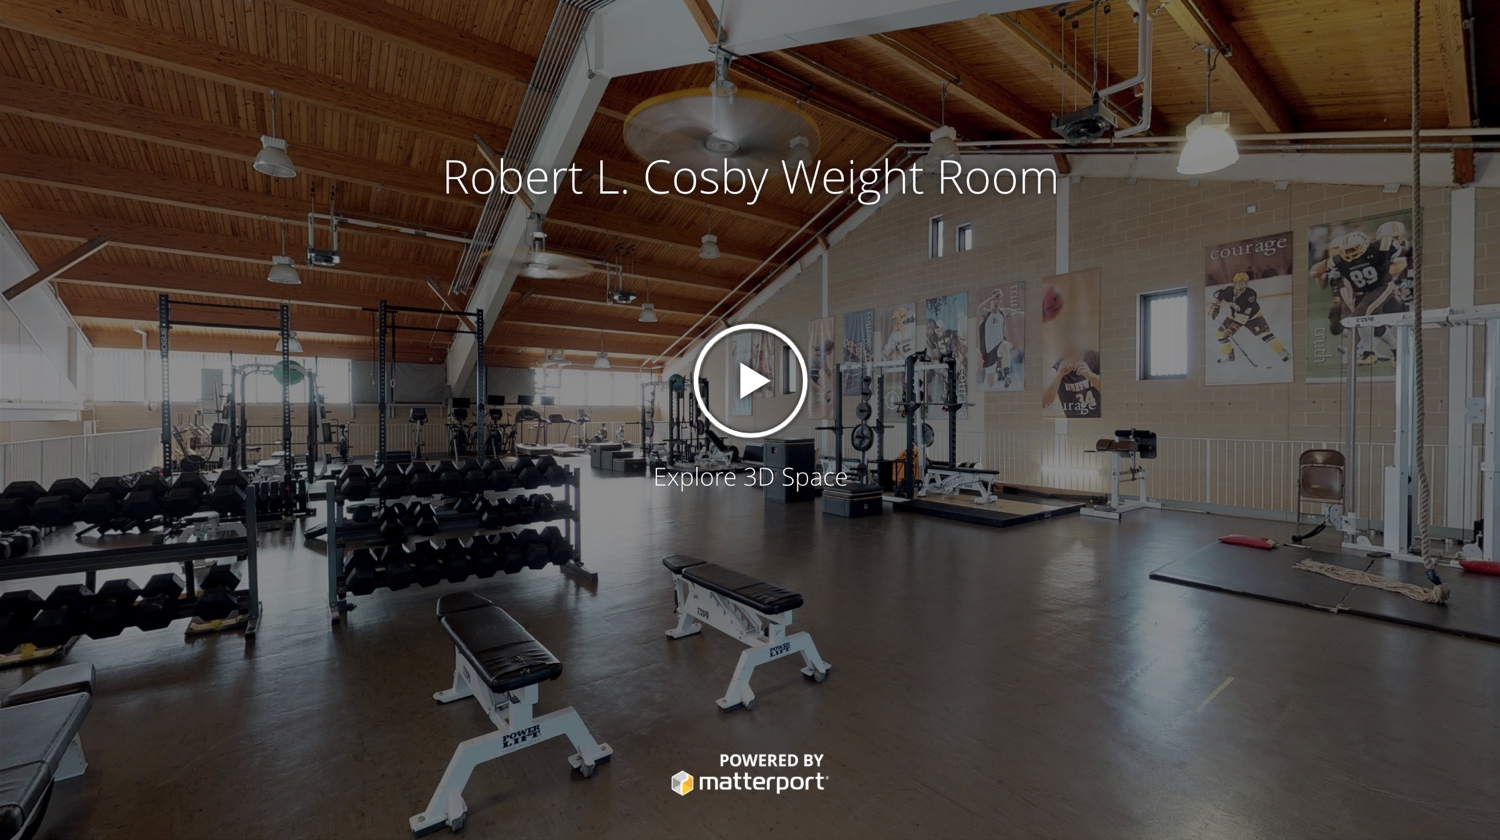 Robert L. Cosby Weight Room